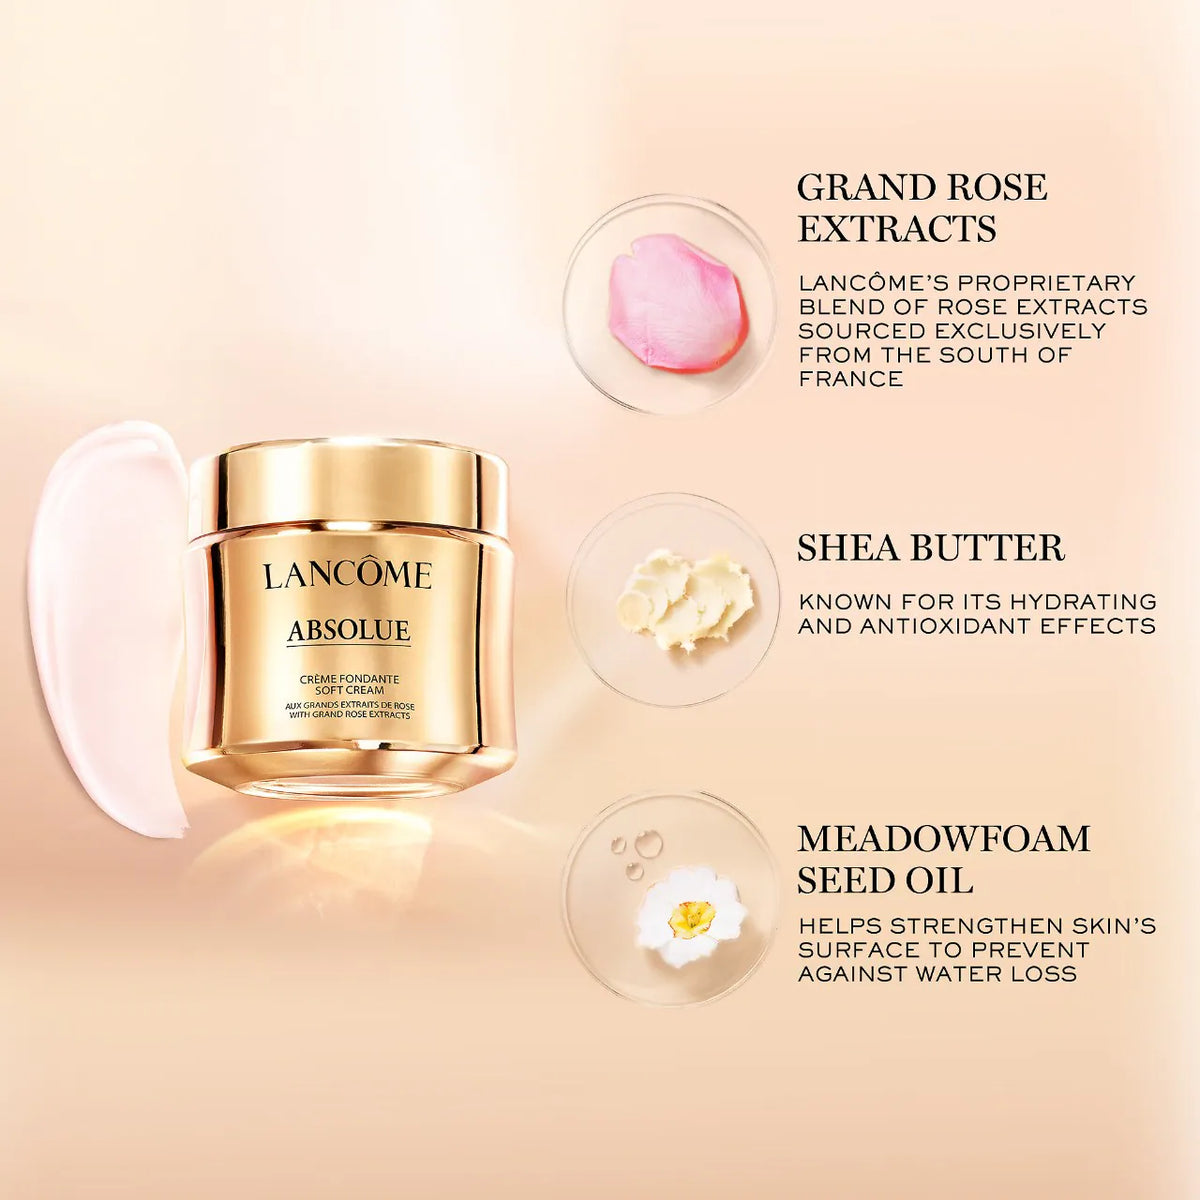 Lancôme Absolue Soft Cream Revitalizing & Brightening Moisturizer Moisturizer Volare Makeup   